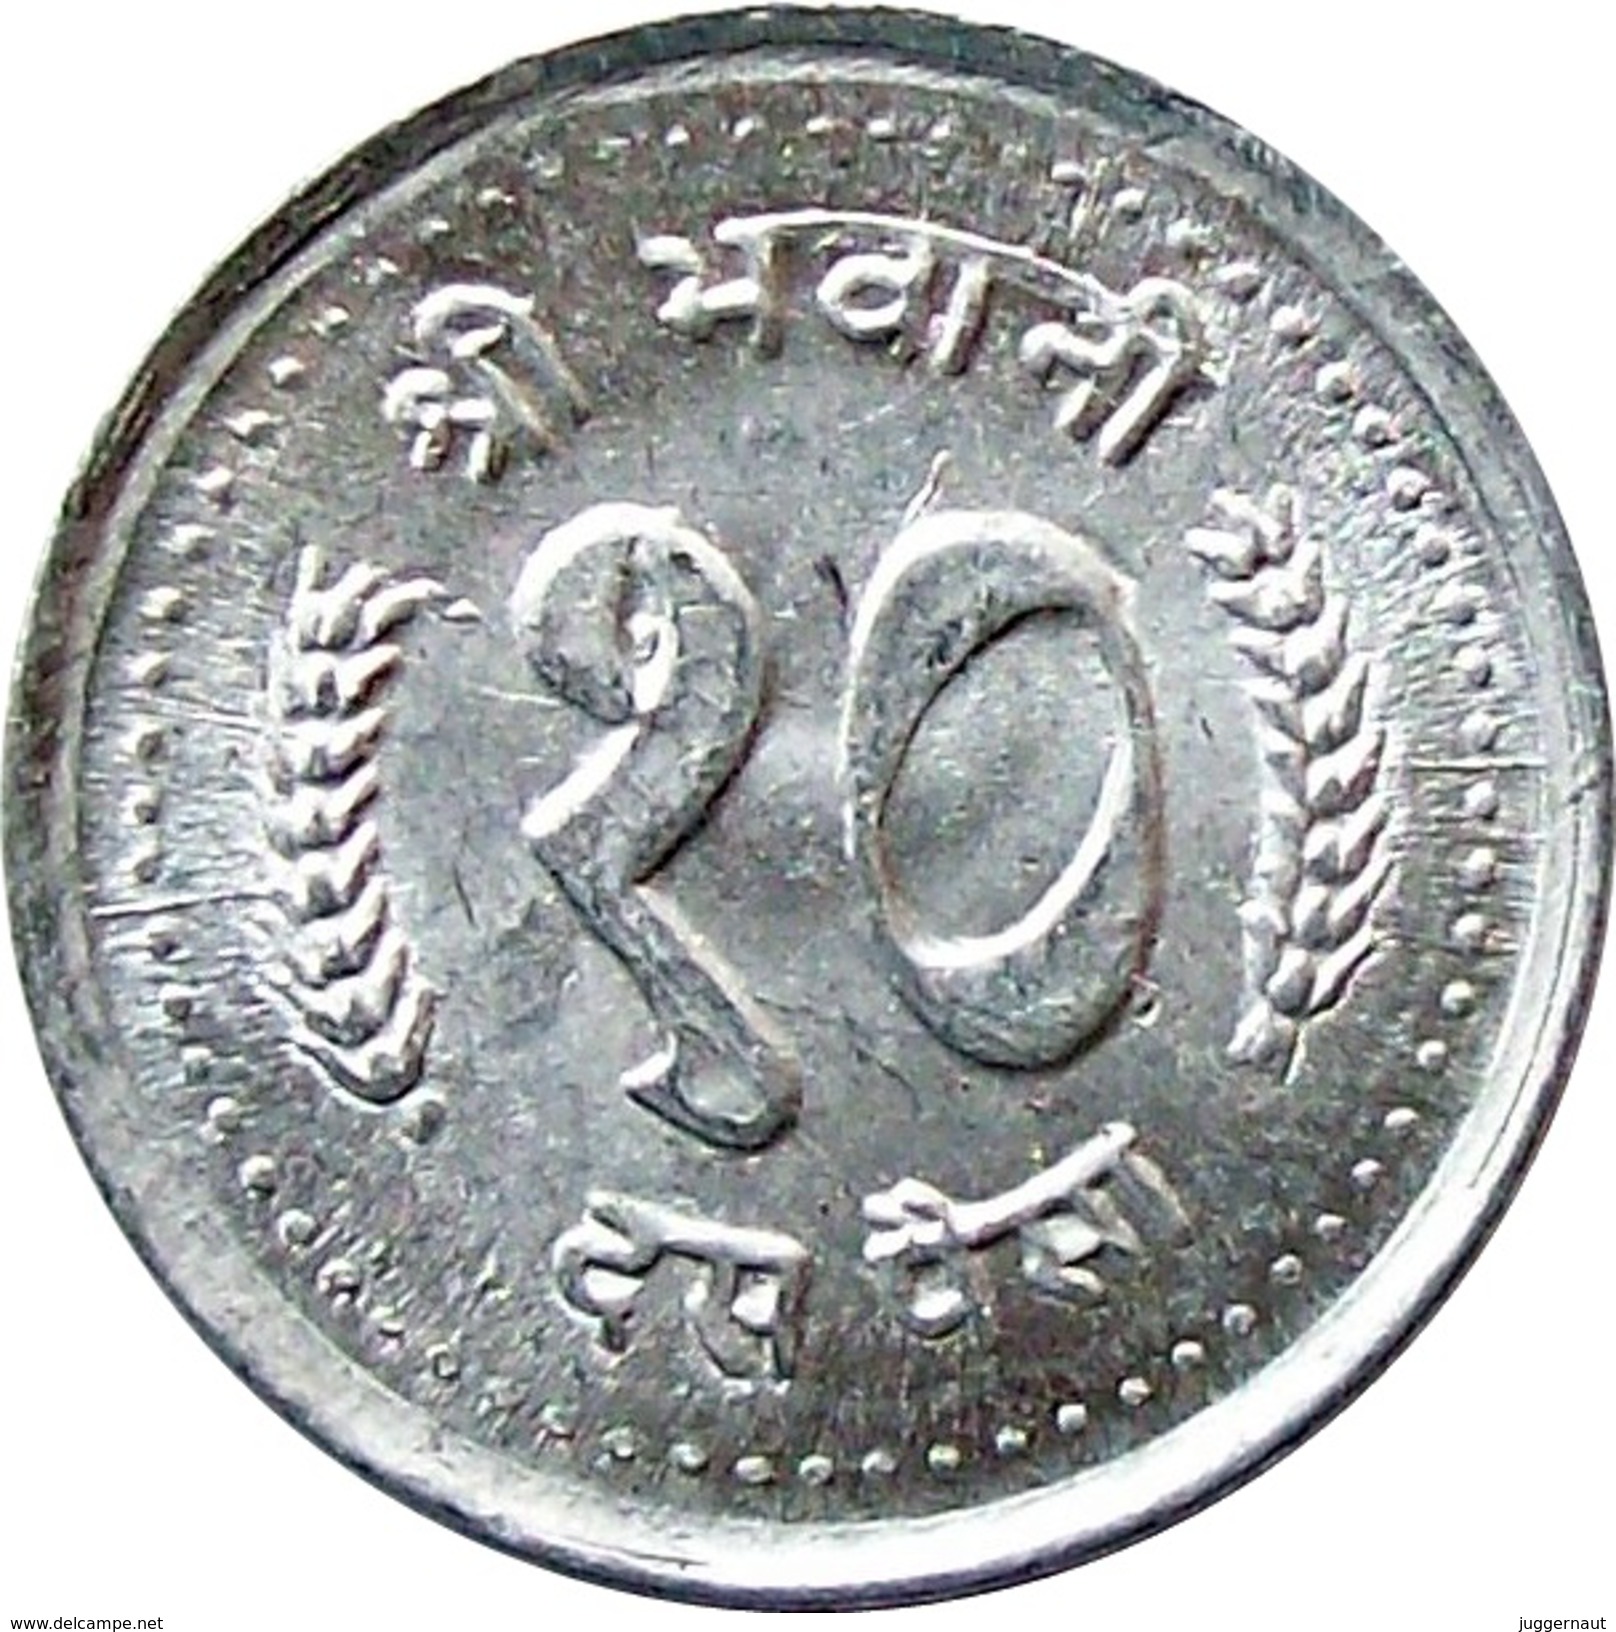 NEPAL 10 PAISA ALLUMINUM COIN 1984-93 KM-1014.2 UNCIRCULATED UNC - Nepal